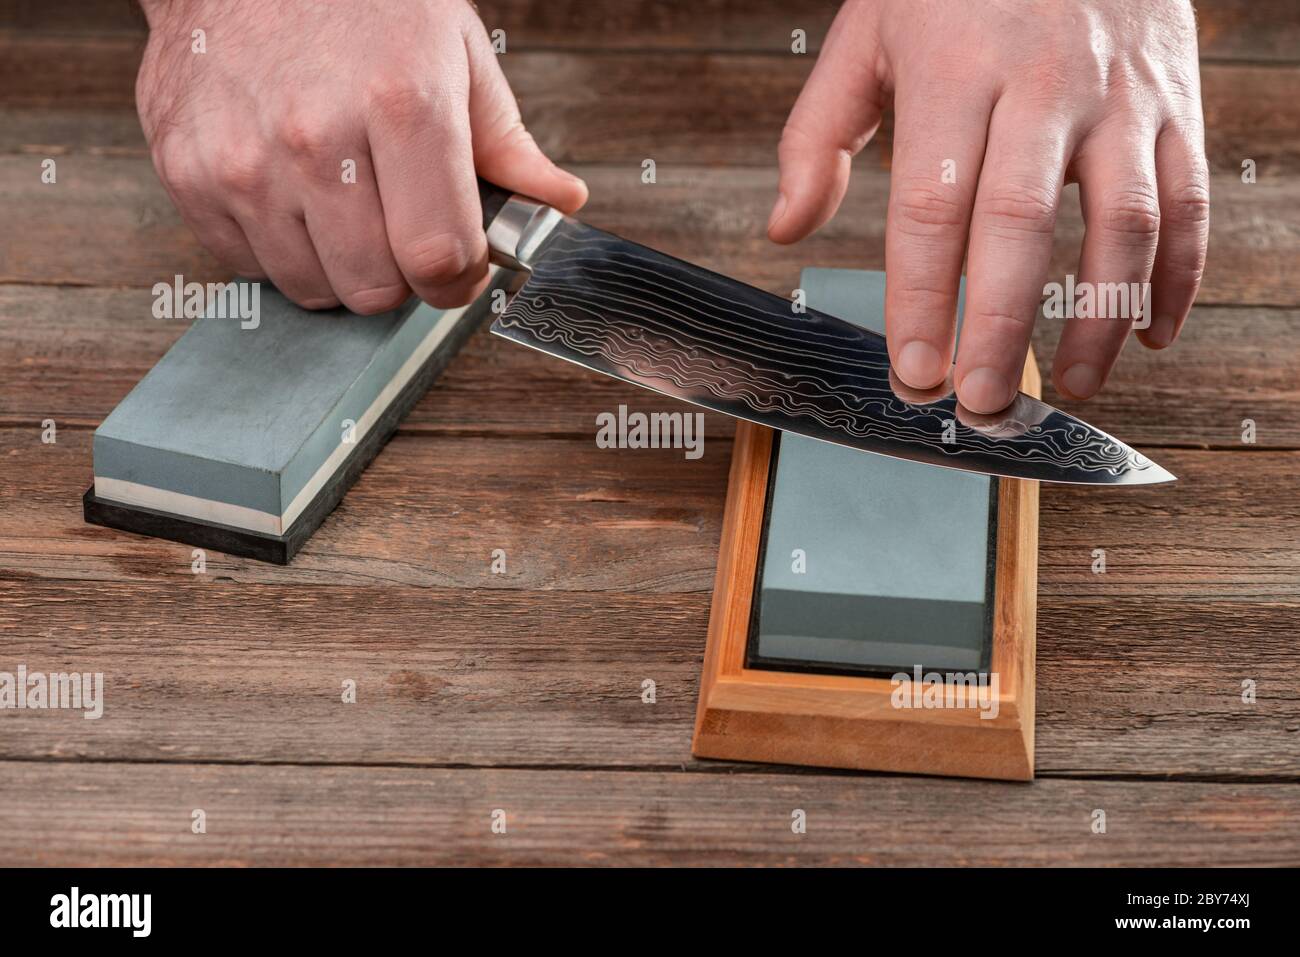 Man Sharpening A Japanese Knife With A Whetstone Stock Photo Alamy,Ficus Lyrata Bush